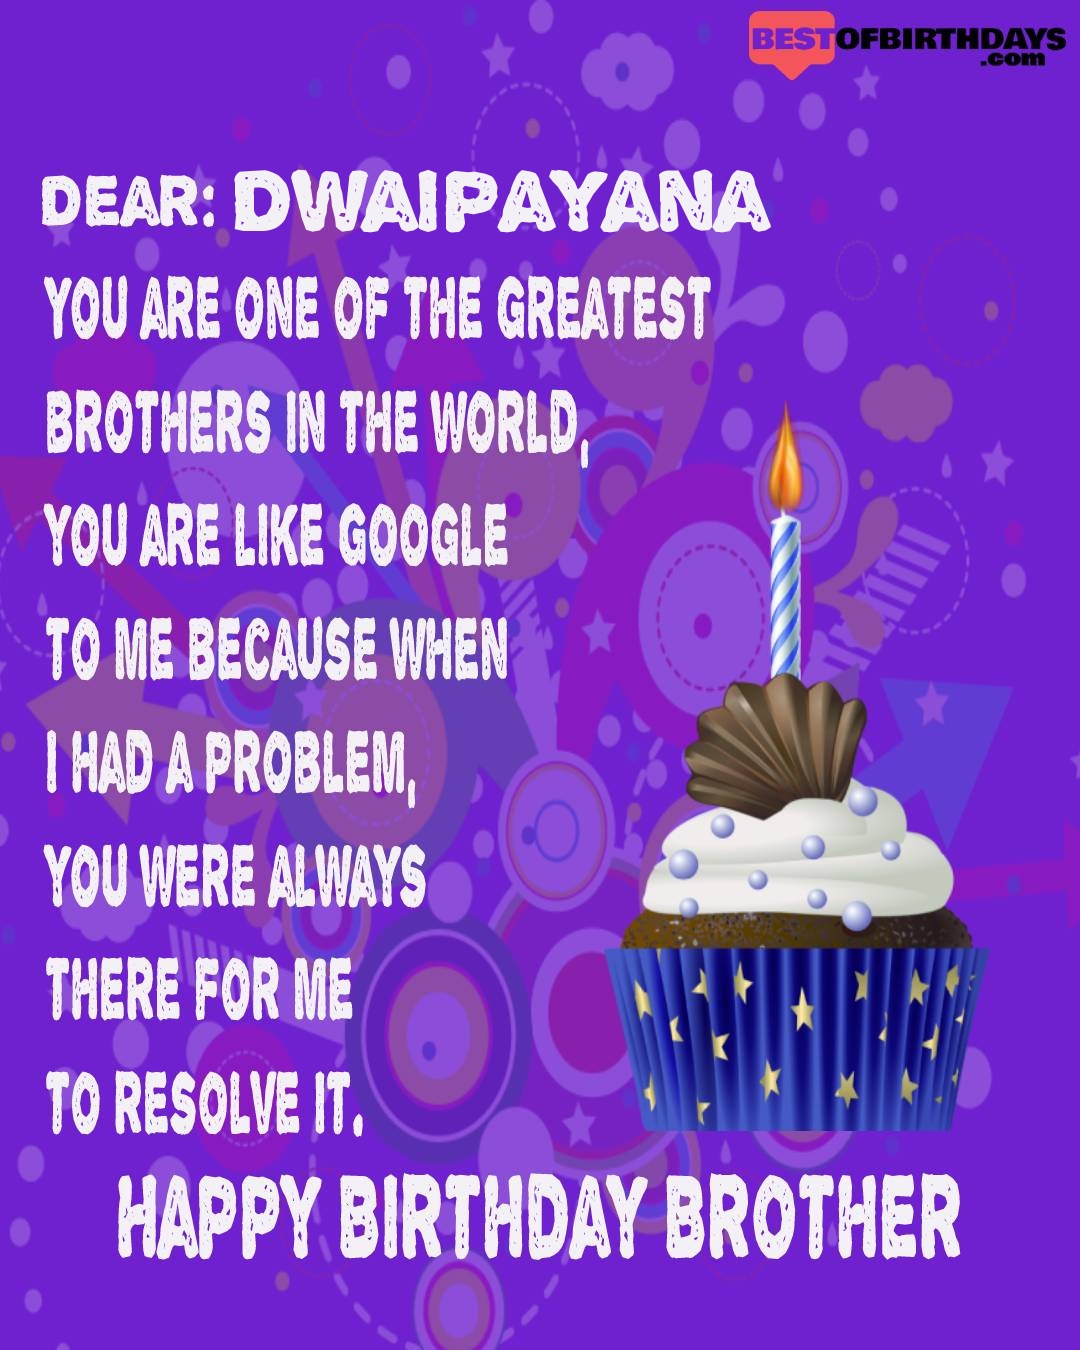 Happy birthday dwaipayana bhai brother bro